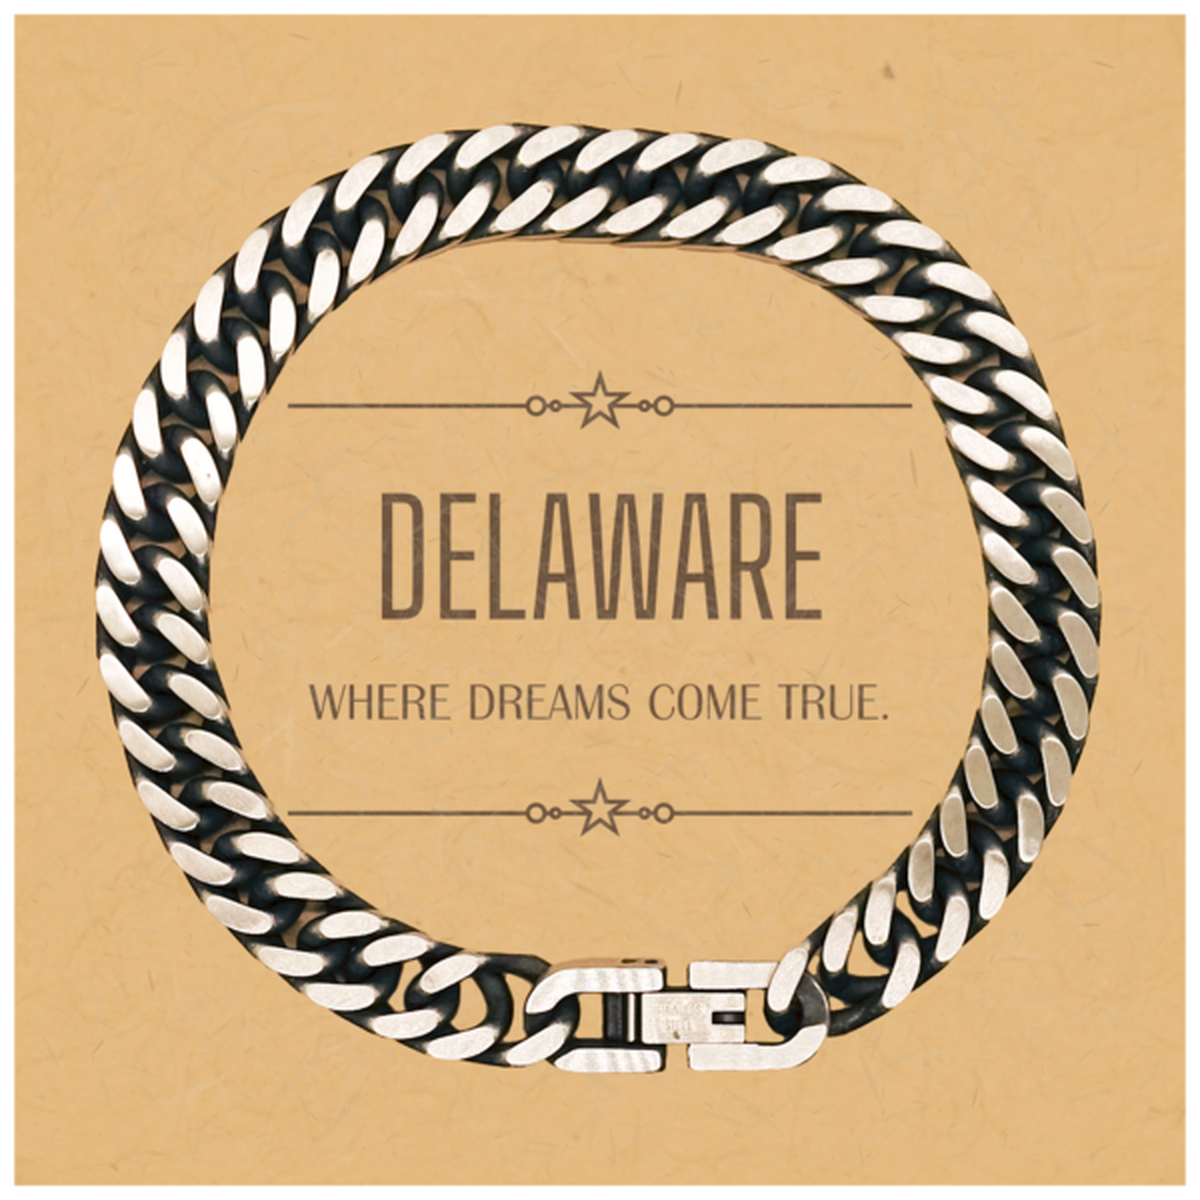 Love Delaware State Cuban Link Chain Bracelet, Delaware Where dreams come true, Birthday Christmas Inspirational Gifts For Delaware Men, Women, Friends